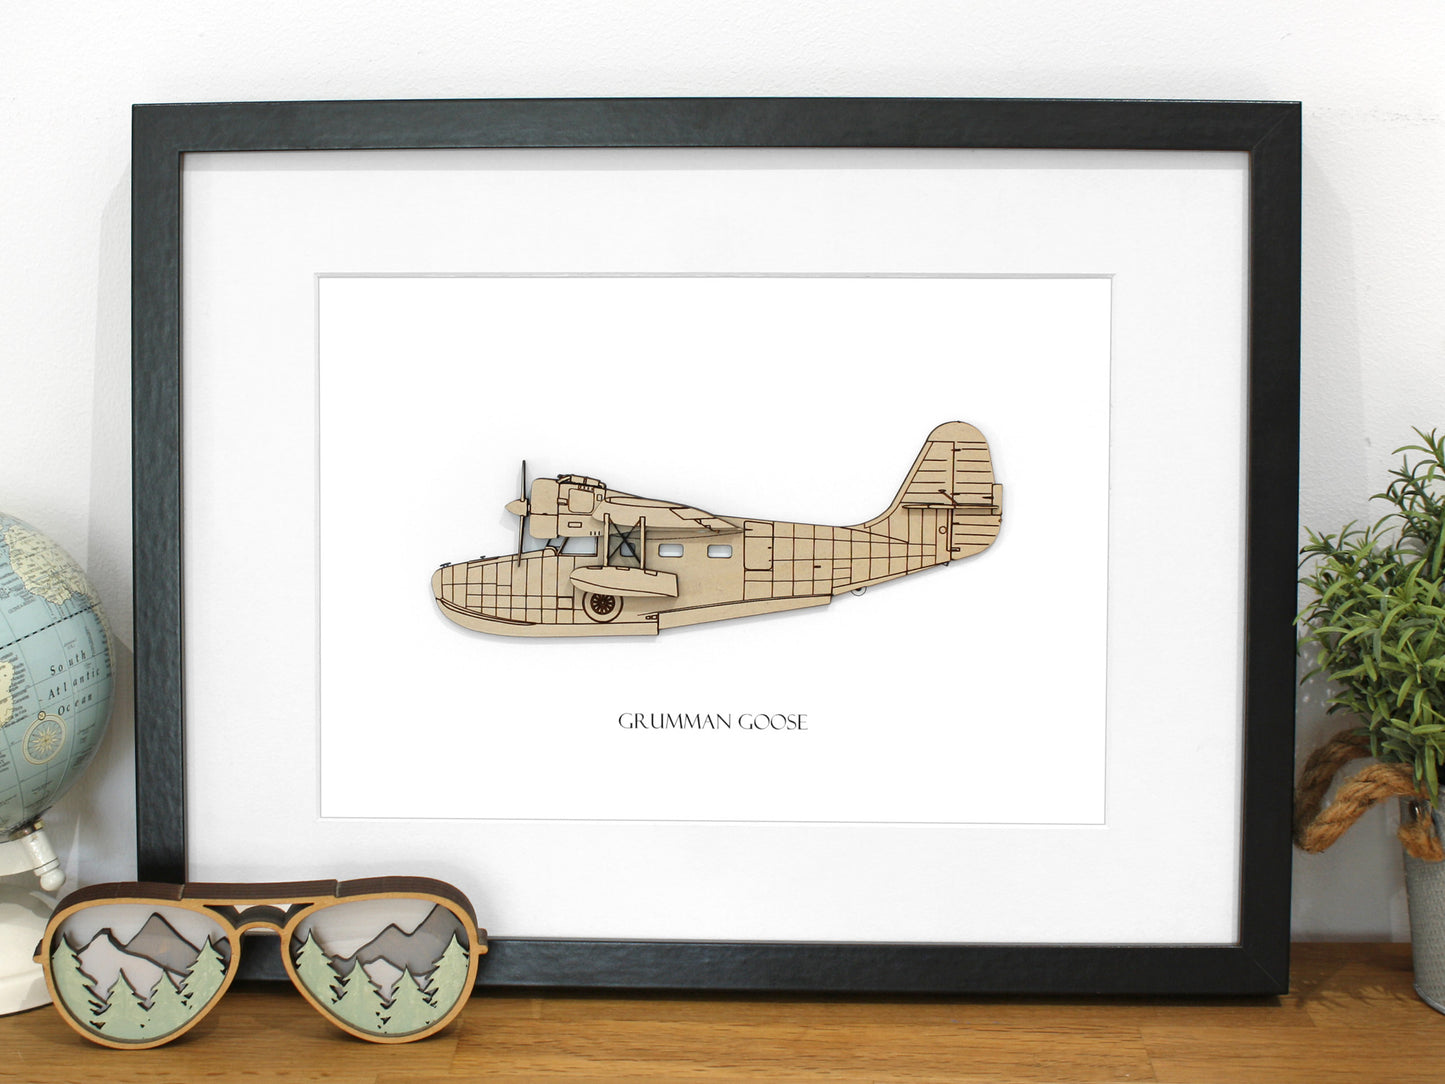 Grumman Goose aviation art